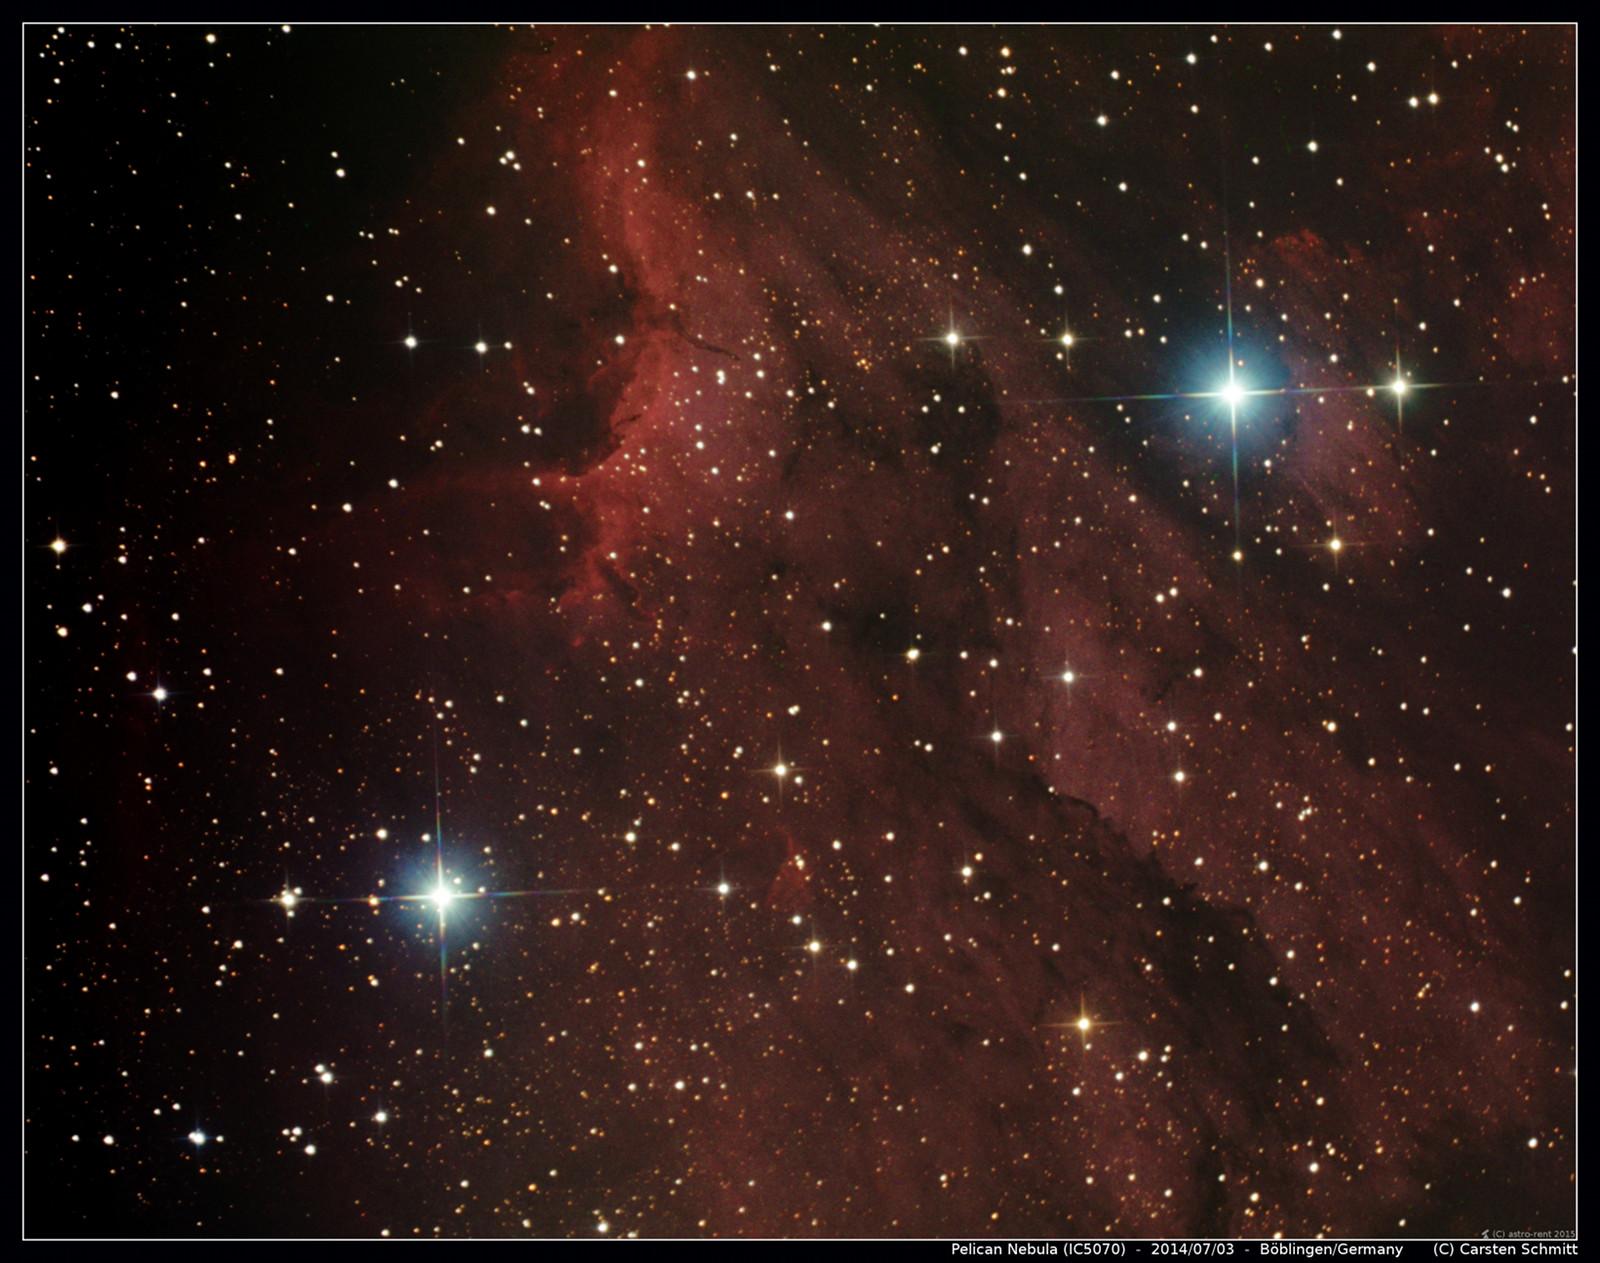 Pelican Nebula (IC5070) - 2014/07/03